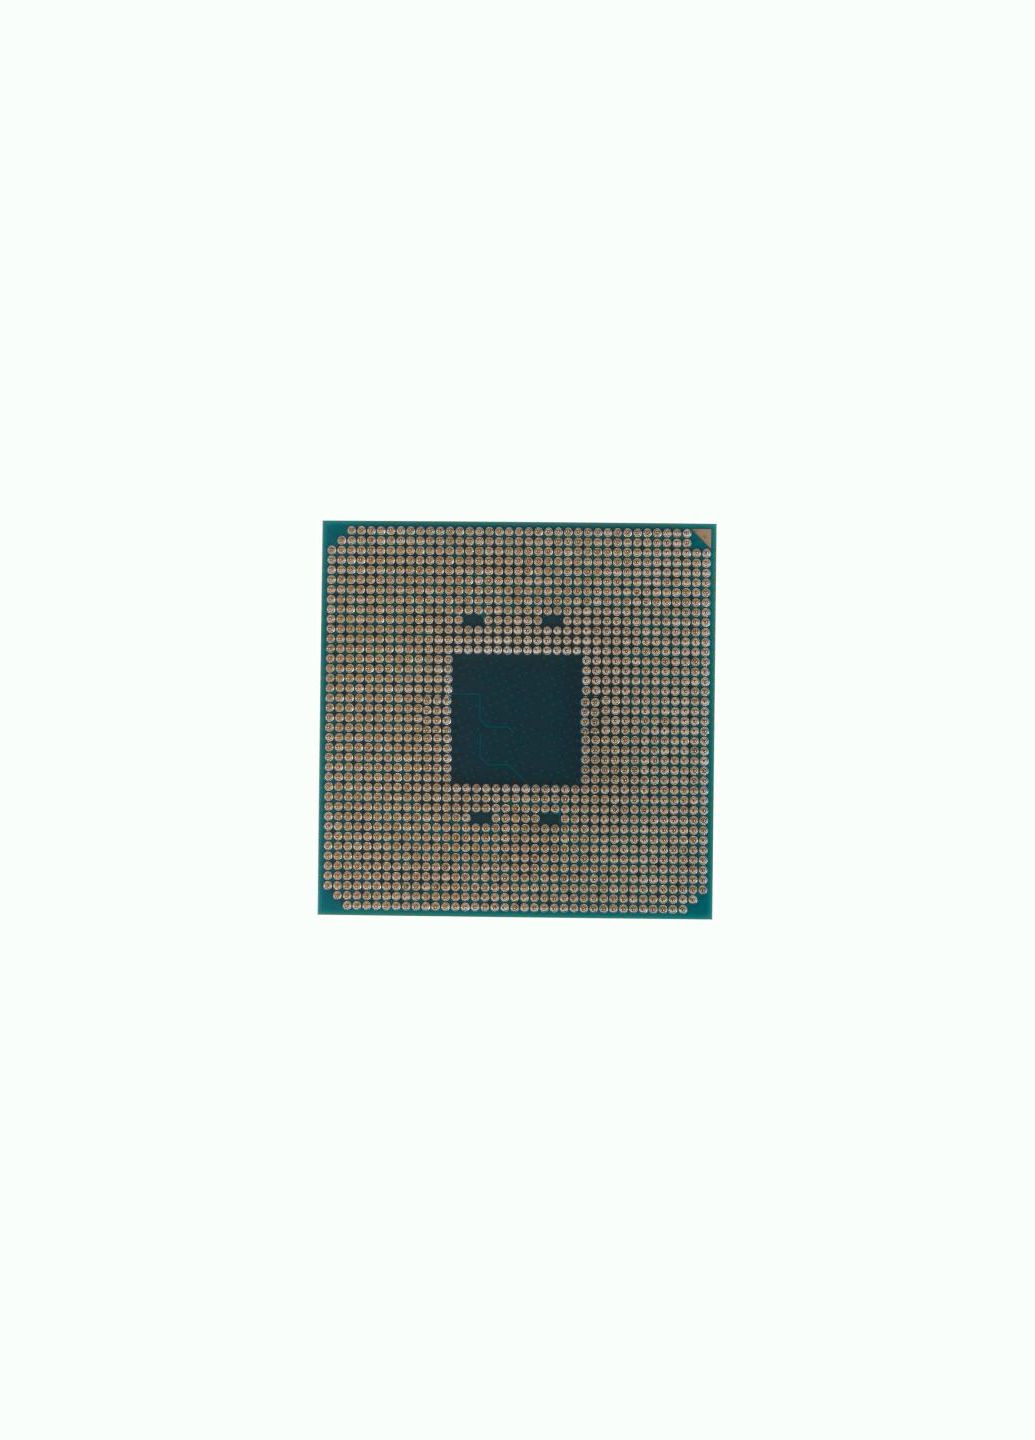 Процессор (AD950XAGM44AB) AMD athlon ™ ii x4 950 (275100786)